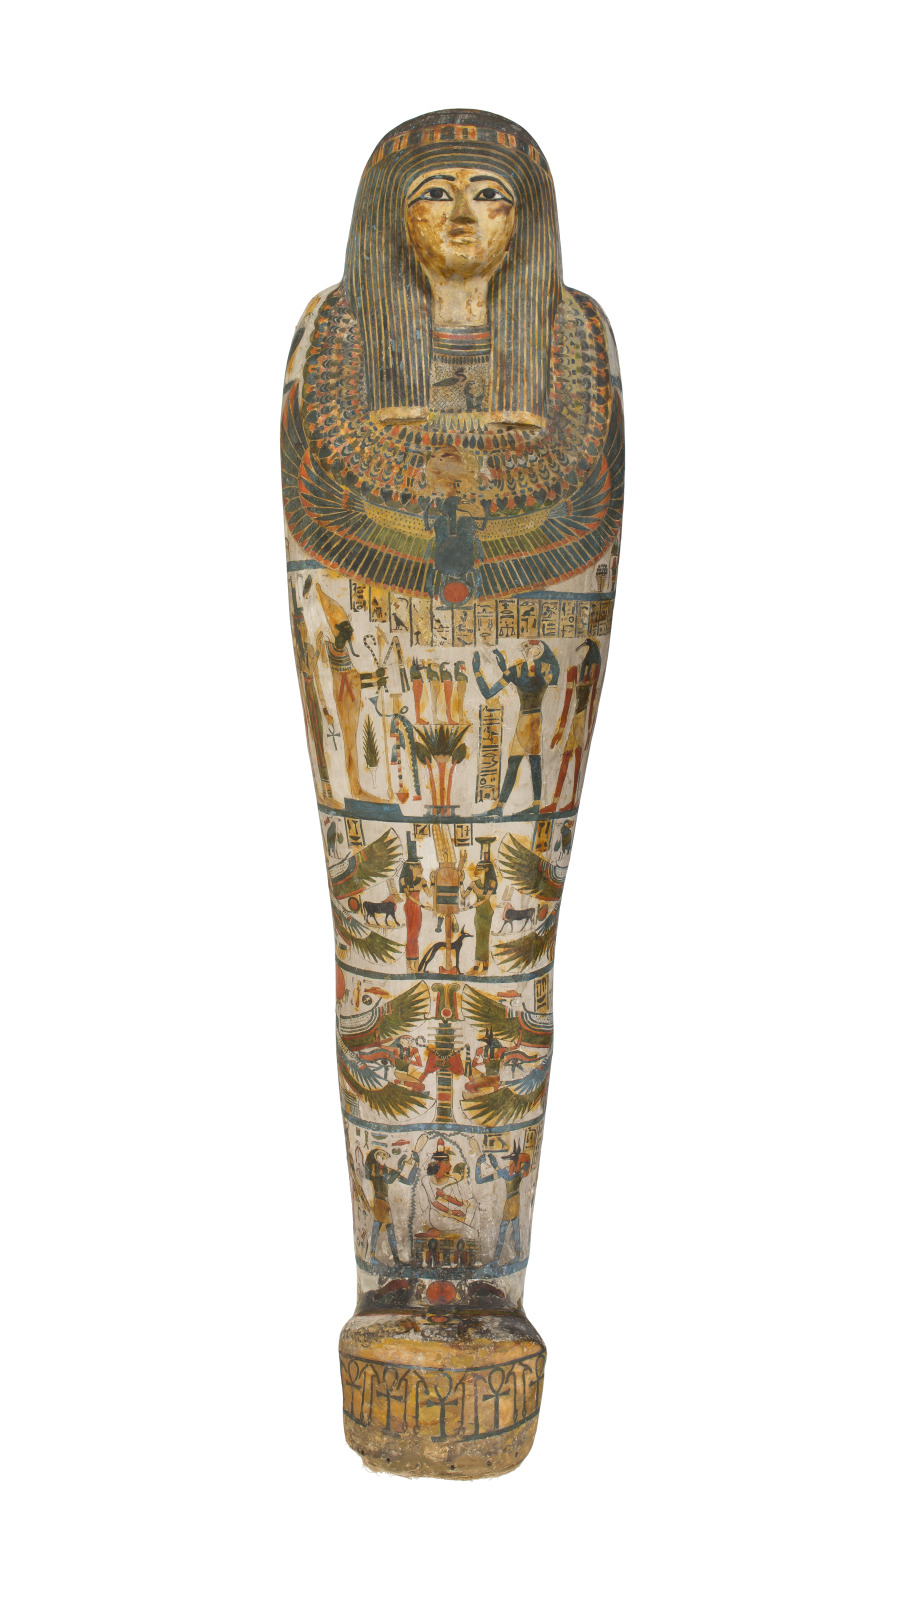 egyptian mummy case